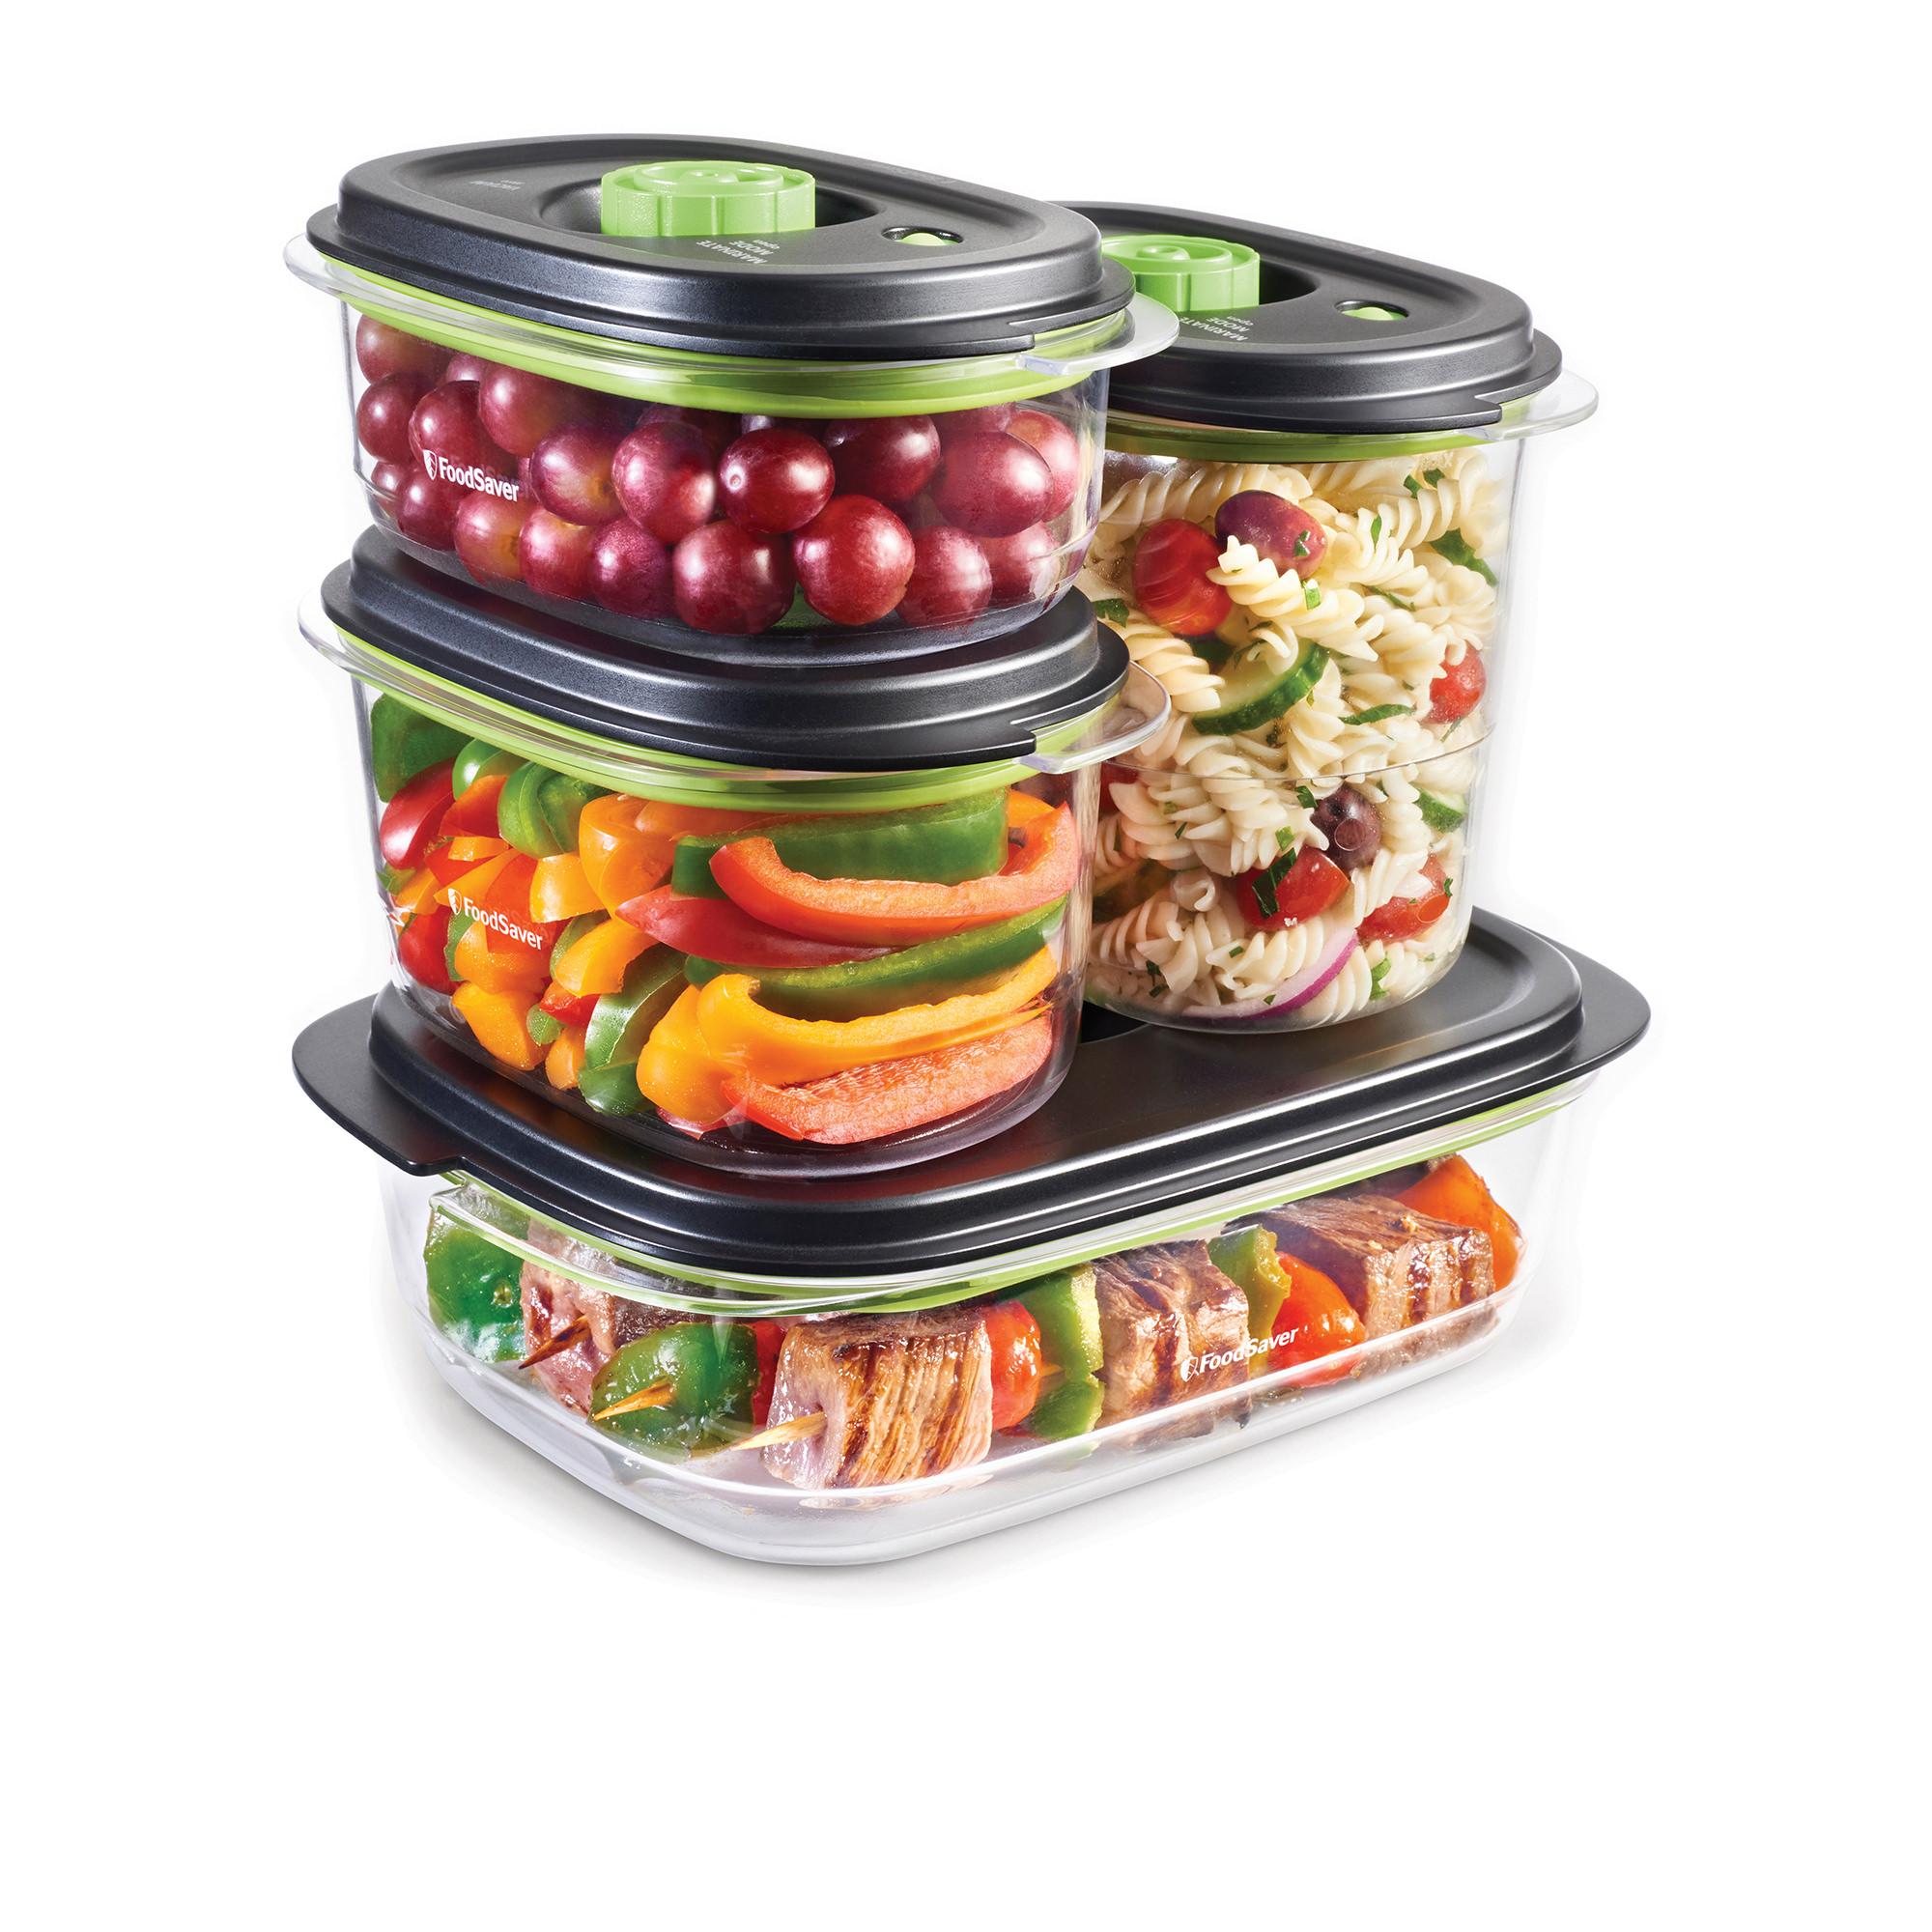 FoodSaver Preserve & Marinate Container 3 & 5 Cup Set 2pc Black Image 3